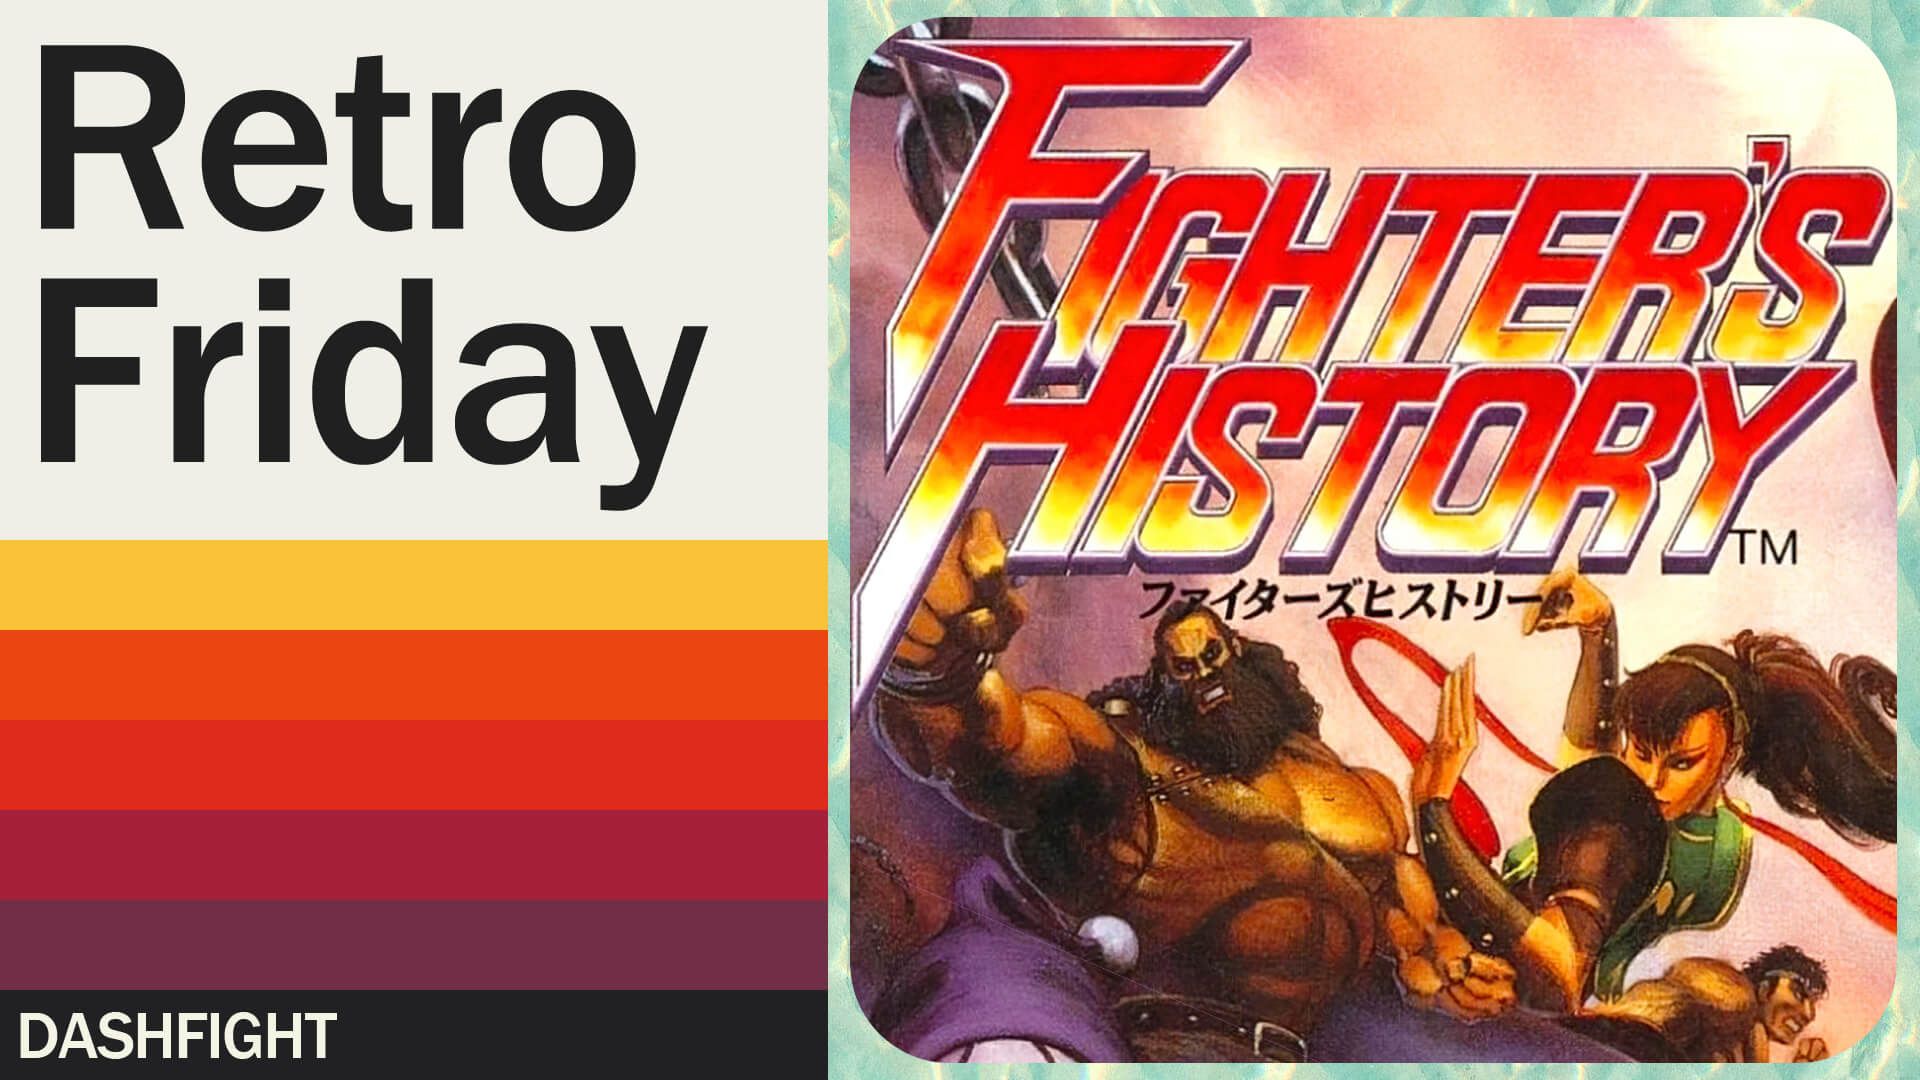 Retro Friday #12: Fighter's History